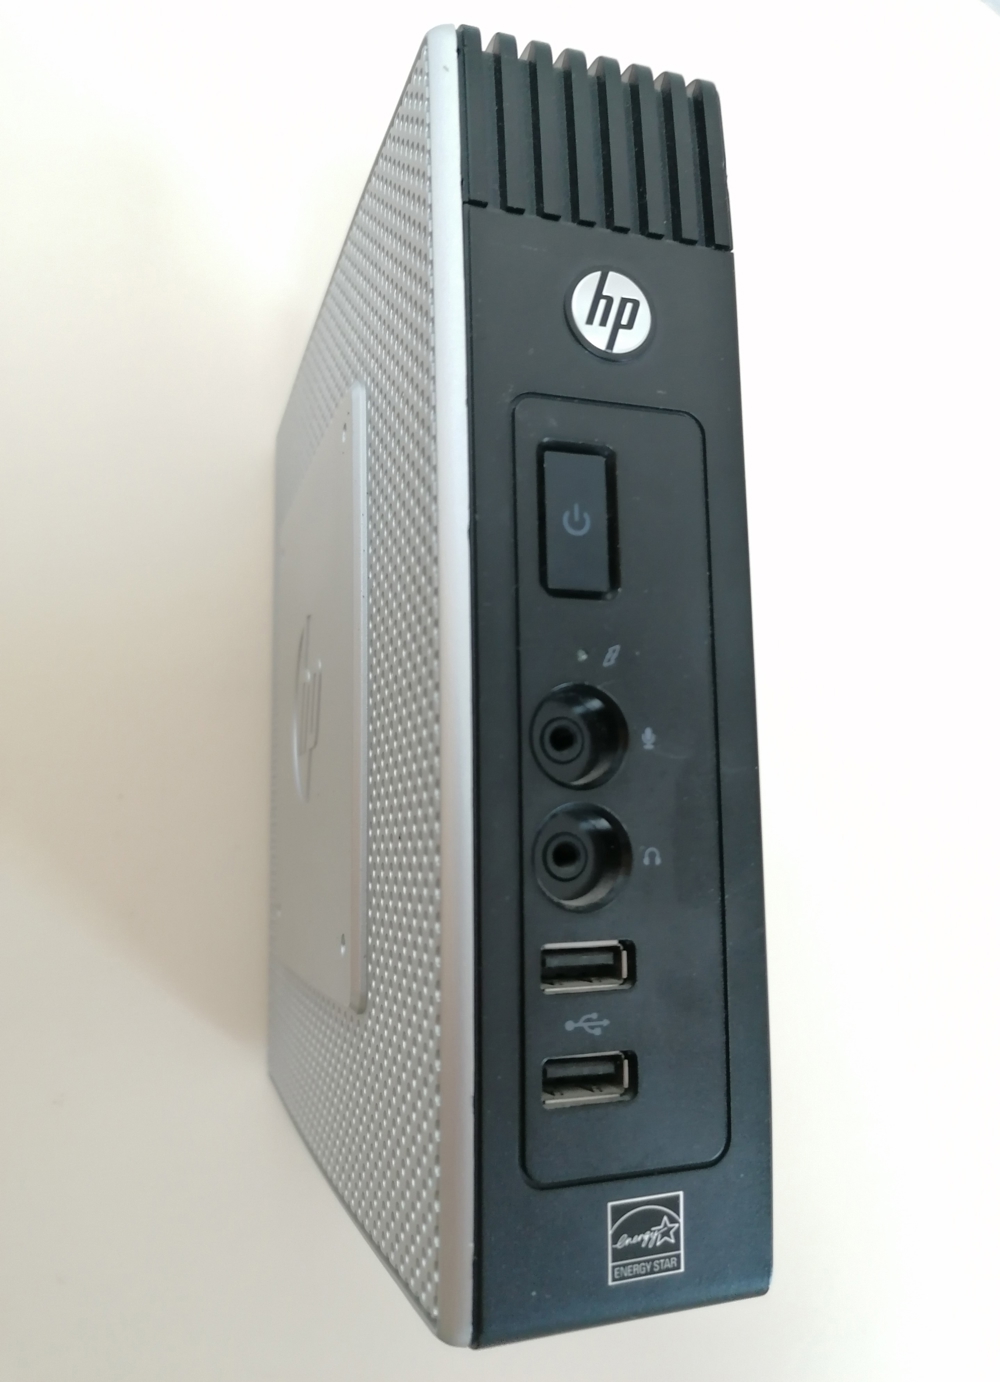 HP T5565 Thin Client -- VIA Nano U3500 1GHz - 1GB RAM - 2 GB SSD